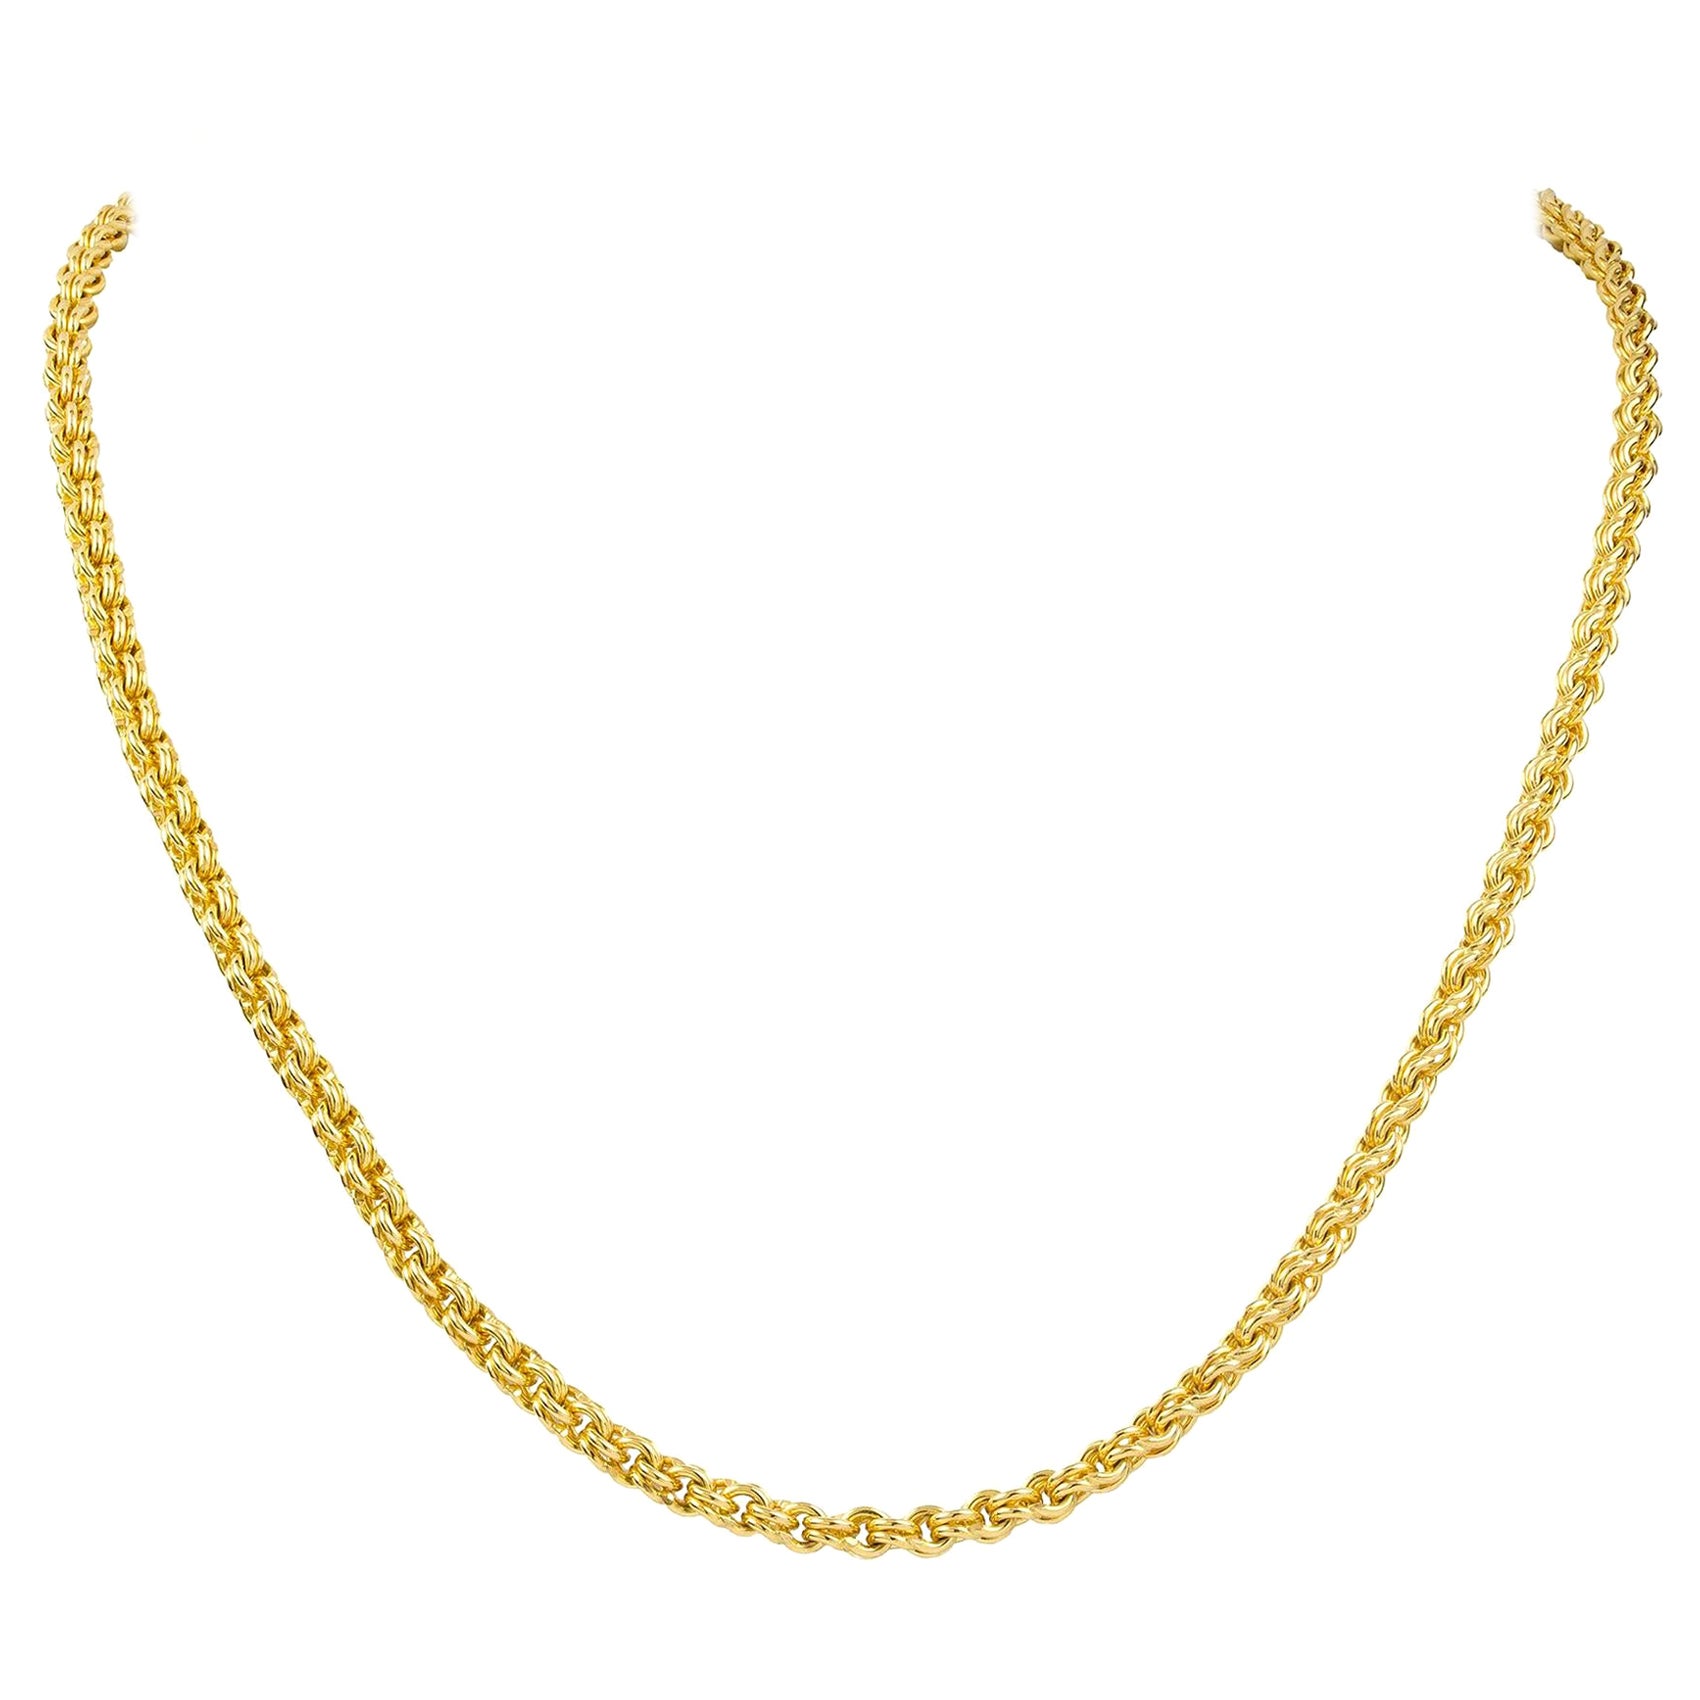 Handmade Minstrel Gold Necklace by Lucie Heskett-Brem For Sale